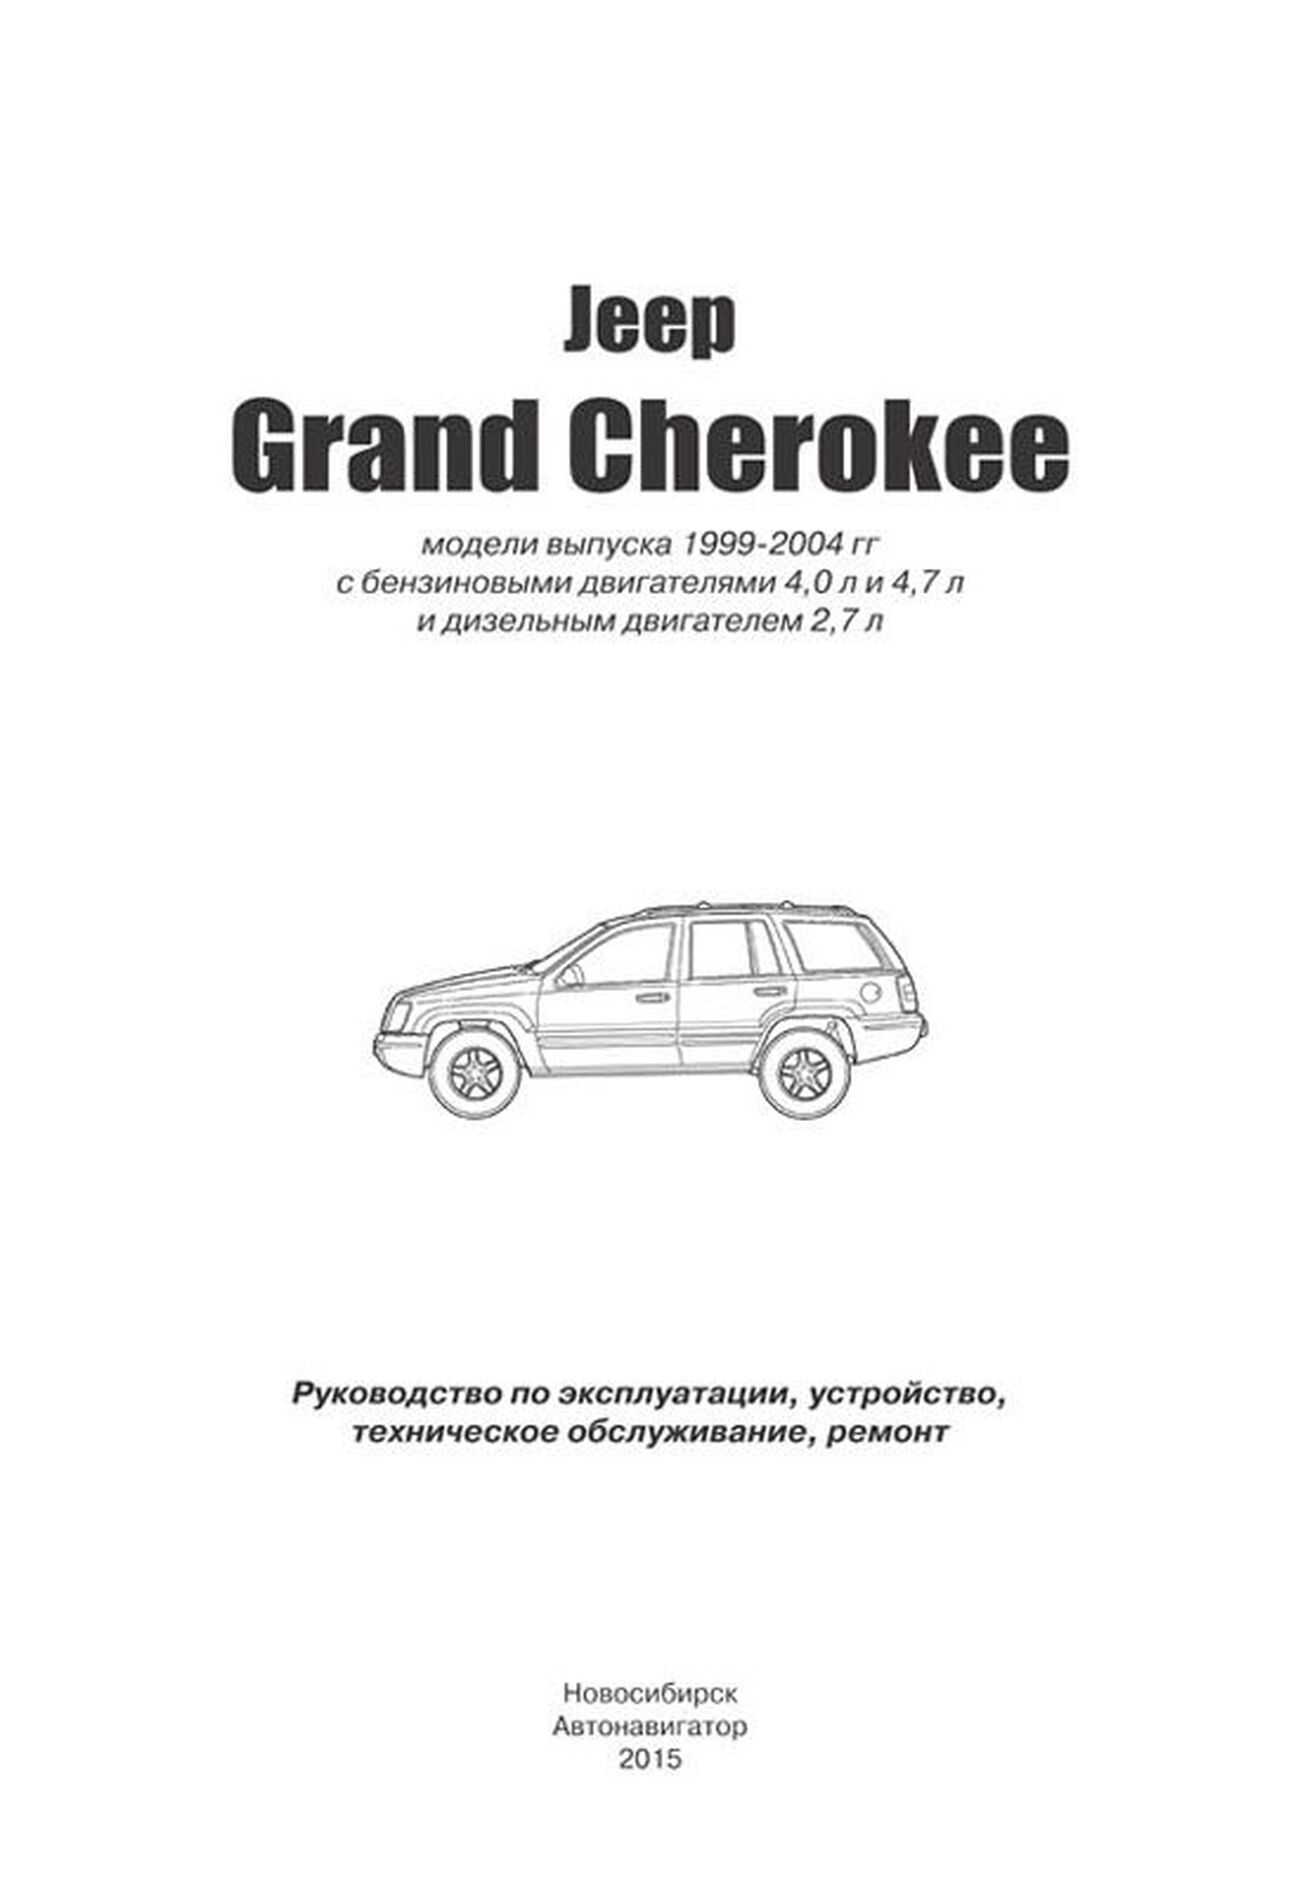 Книга: JEEP GRAND CHEROKEE (б , д) 1999-2004 г.в., рем., экспл., то | Автонавигатор